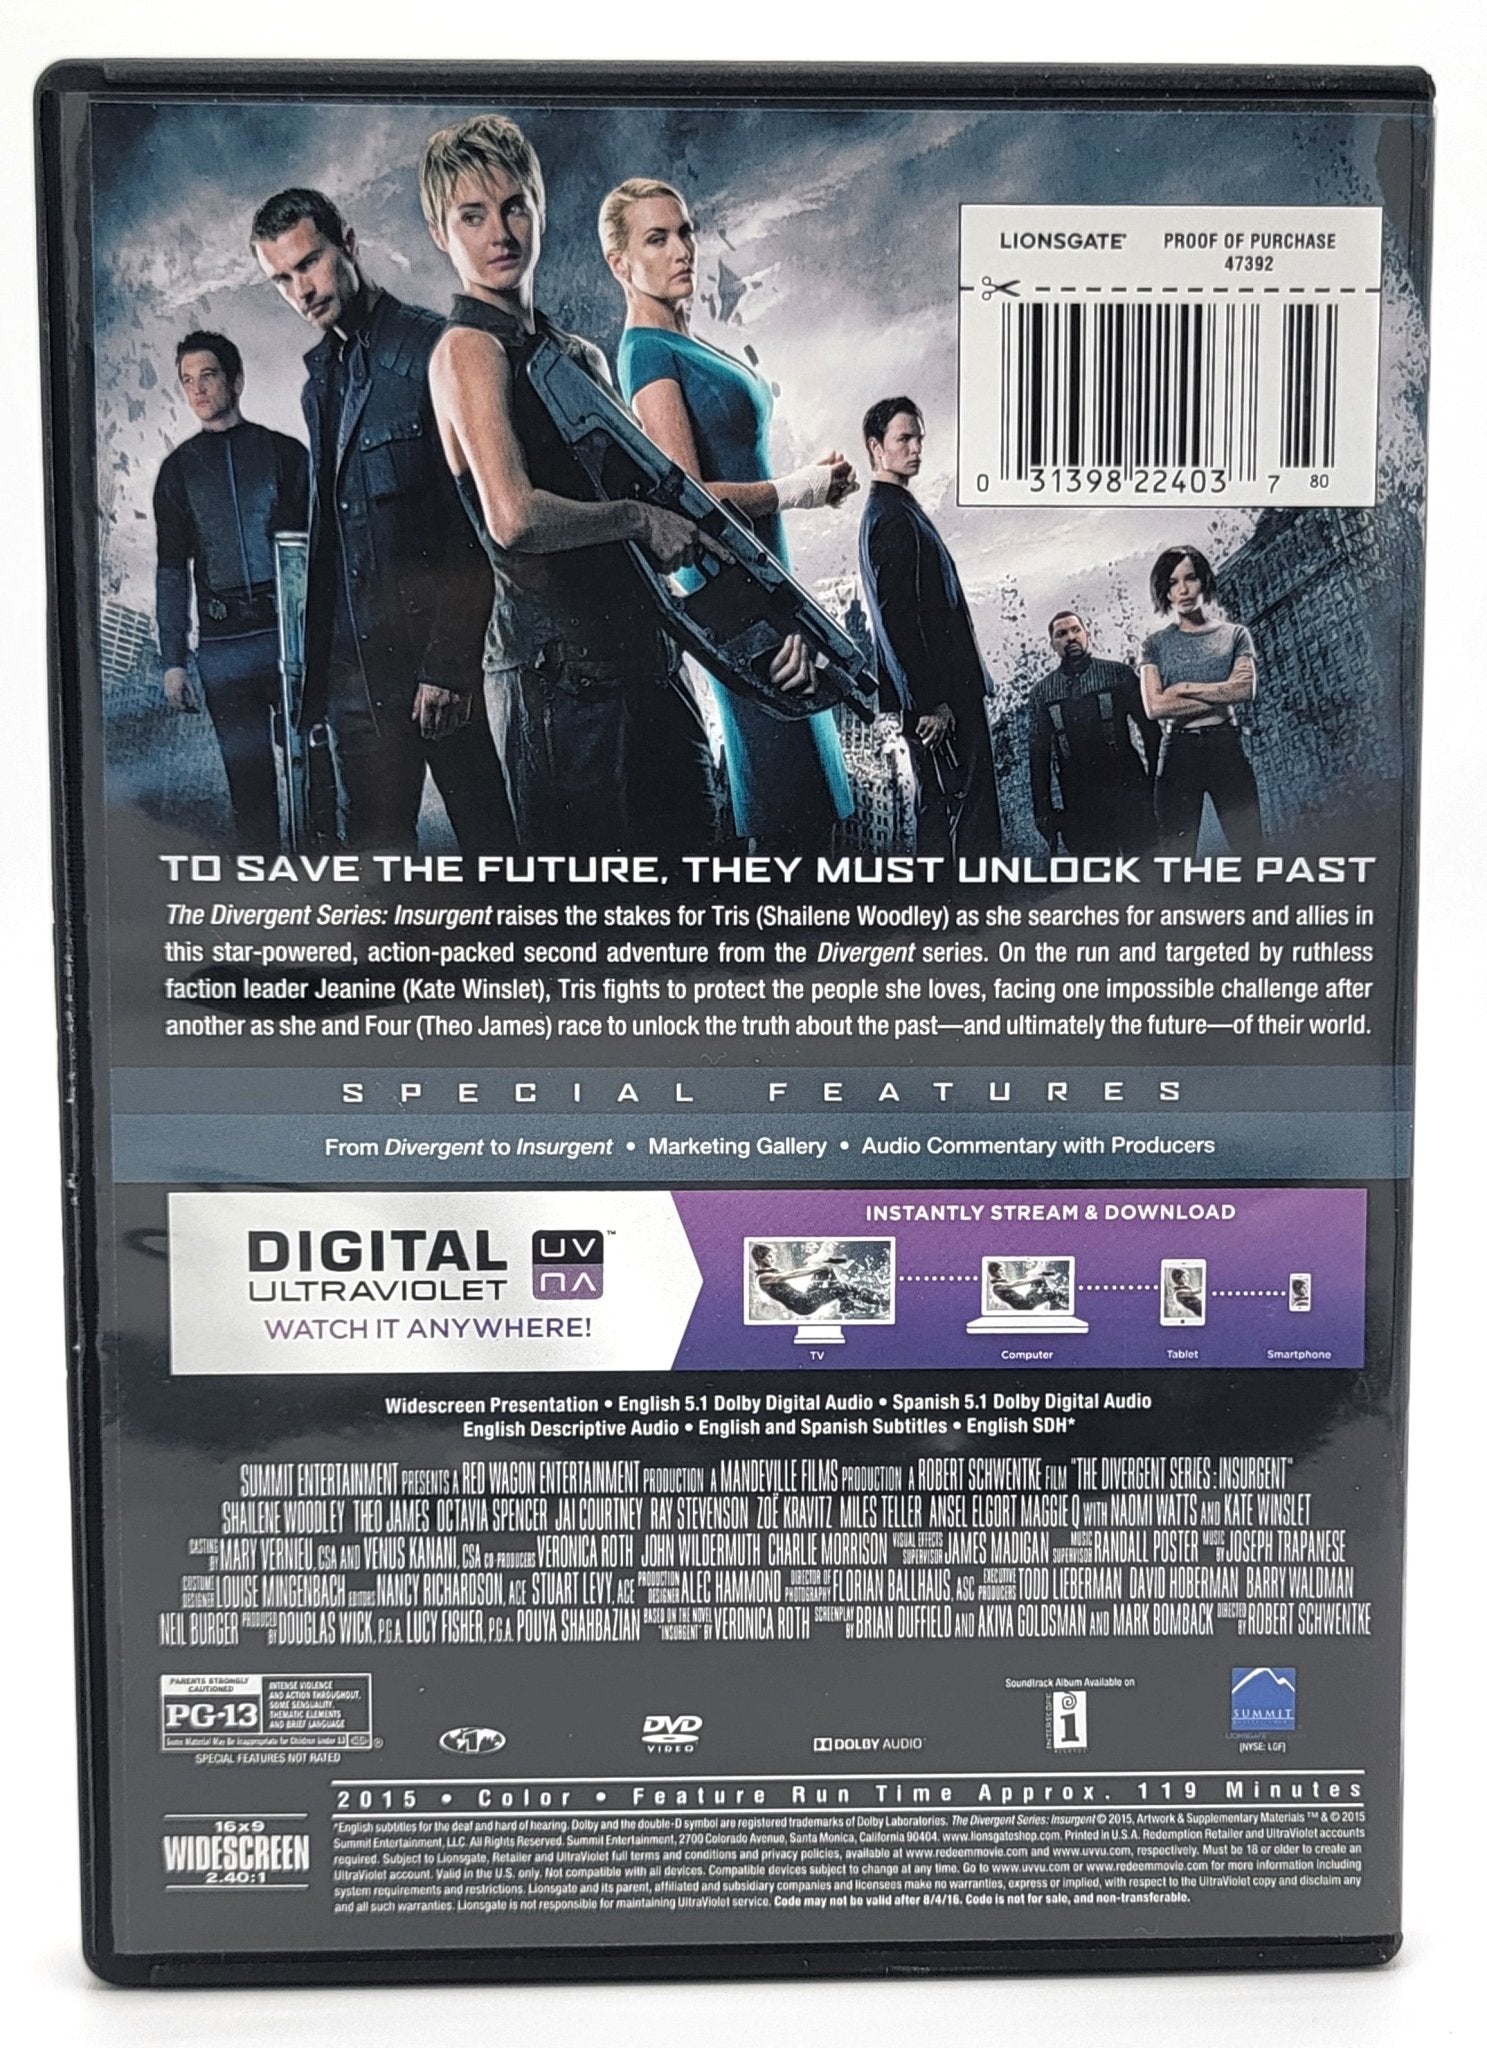 Lionsgate Home Entertainment - The Divergent Series - Insurgent | DVD | Widescreen - DVD - Steady Bunny Shop